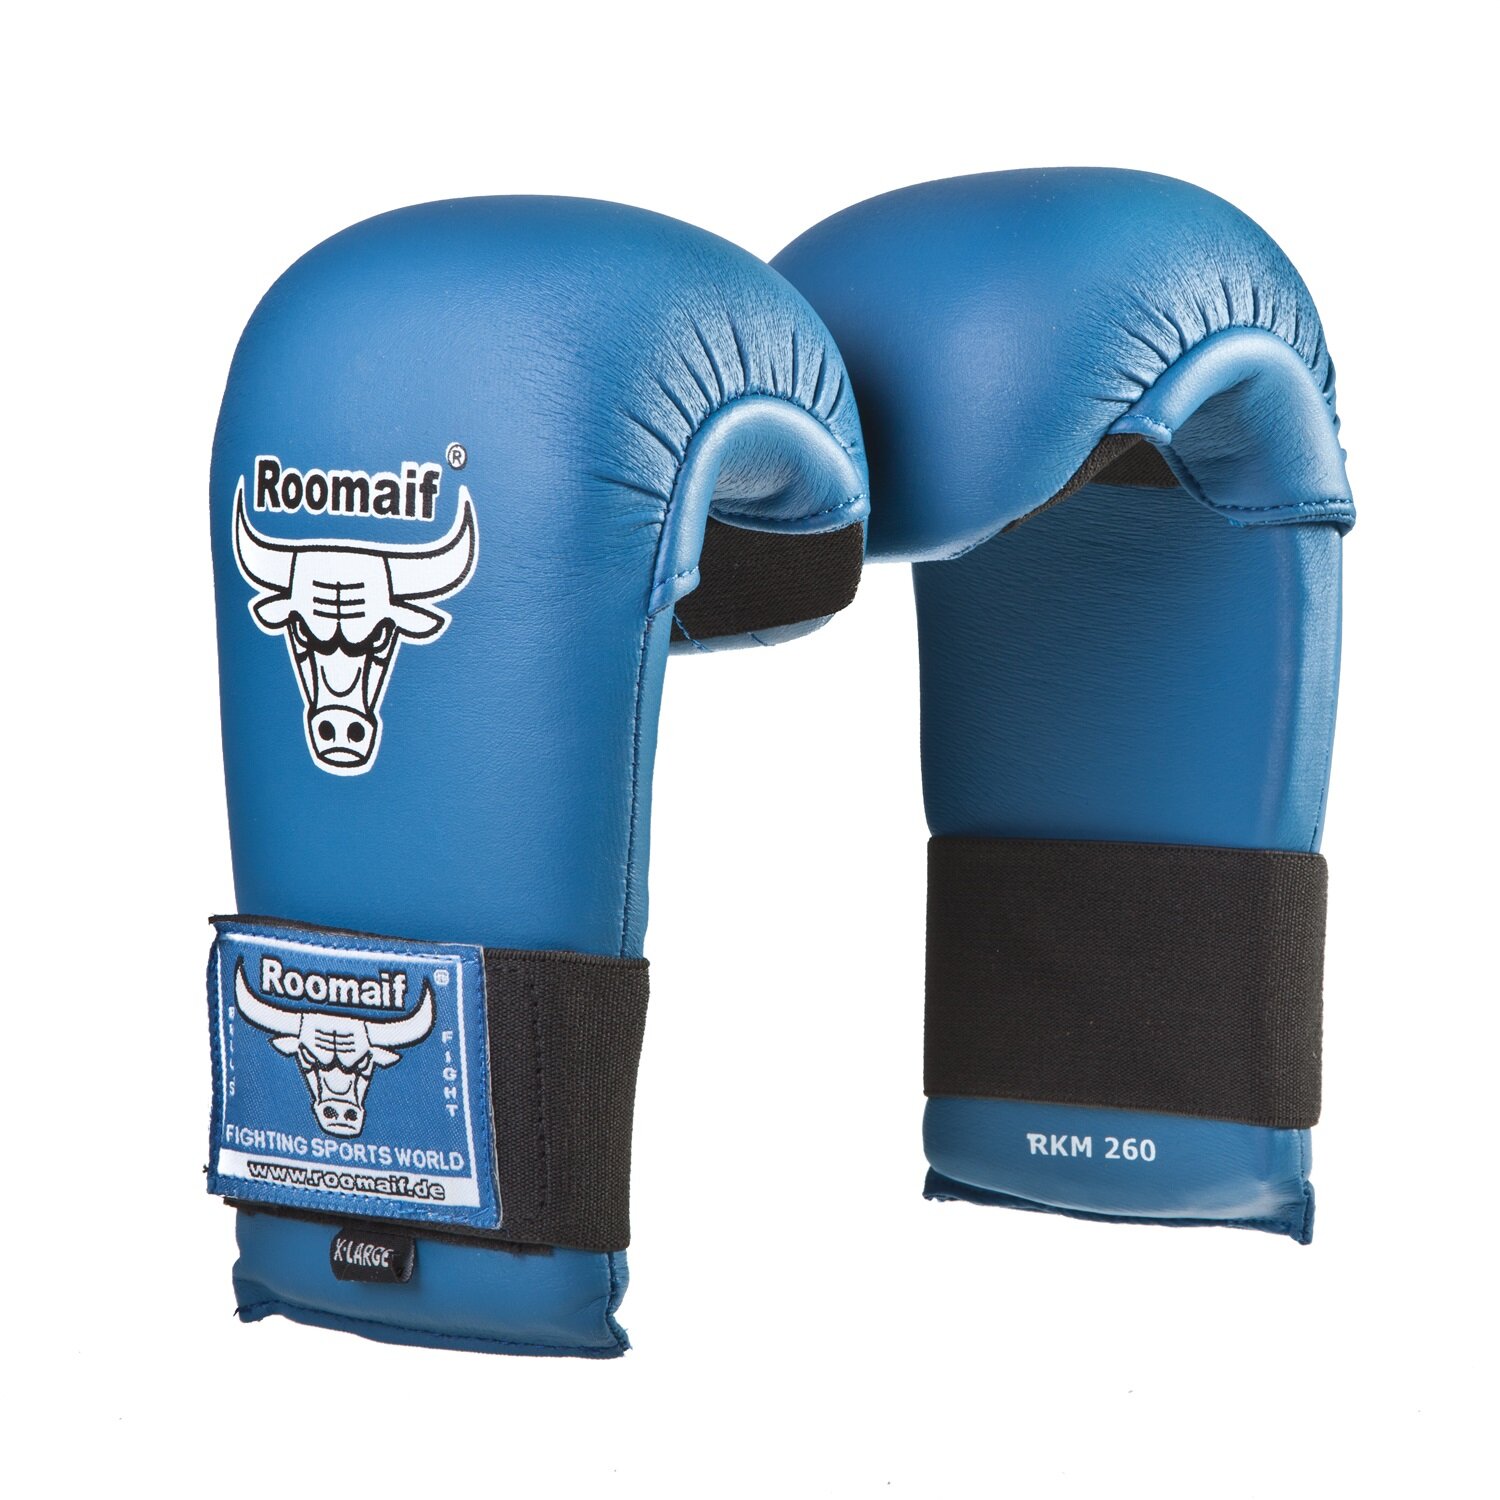 Спарринговые перчатки для каратэ Roomaif Rkm-260 пу синие размер L